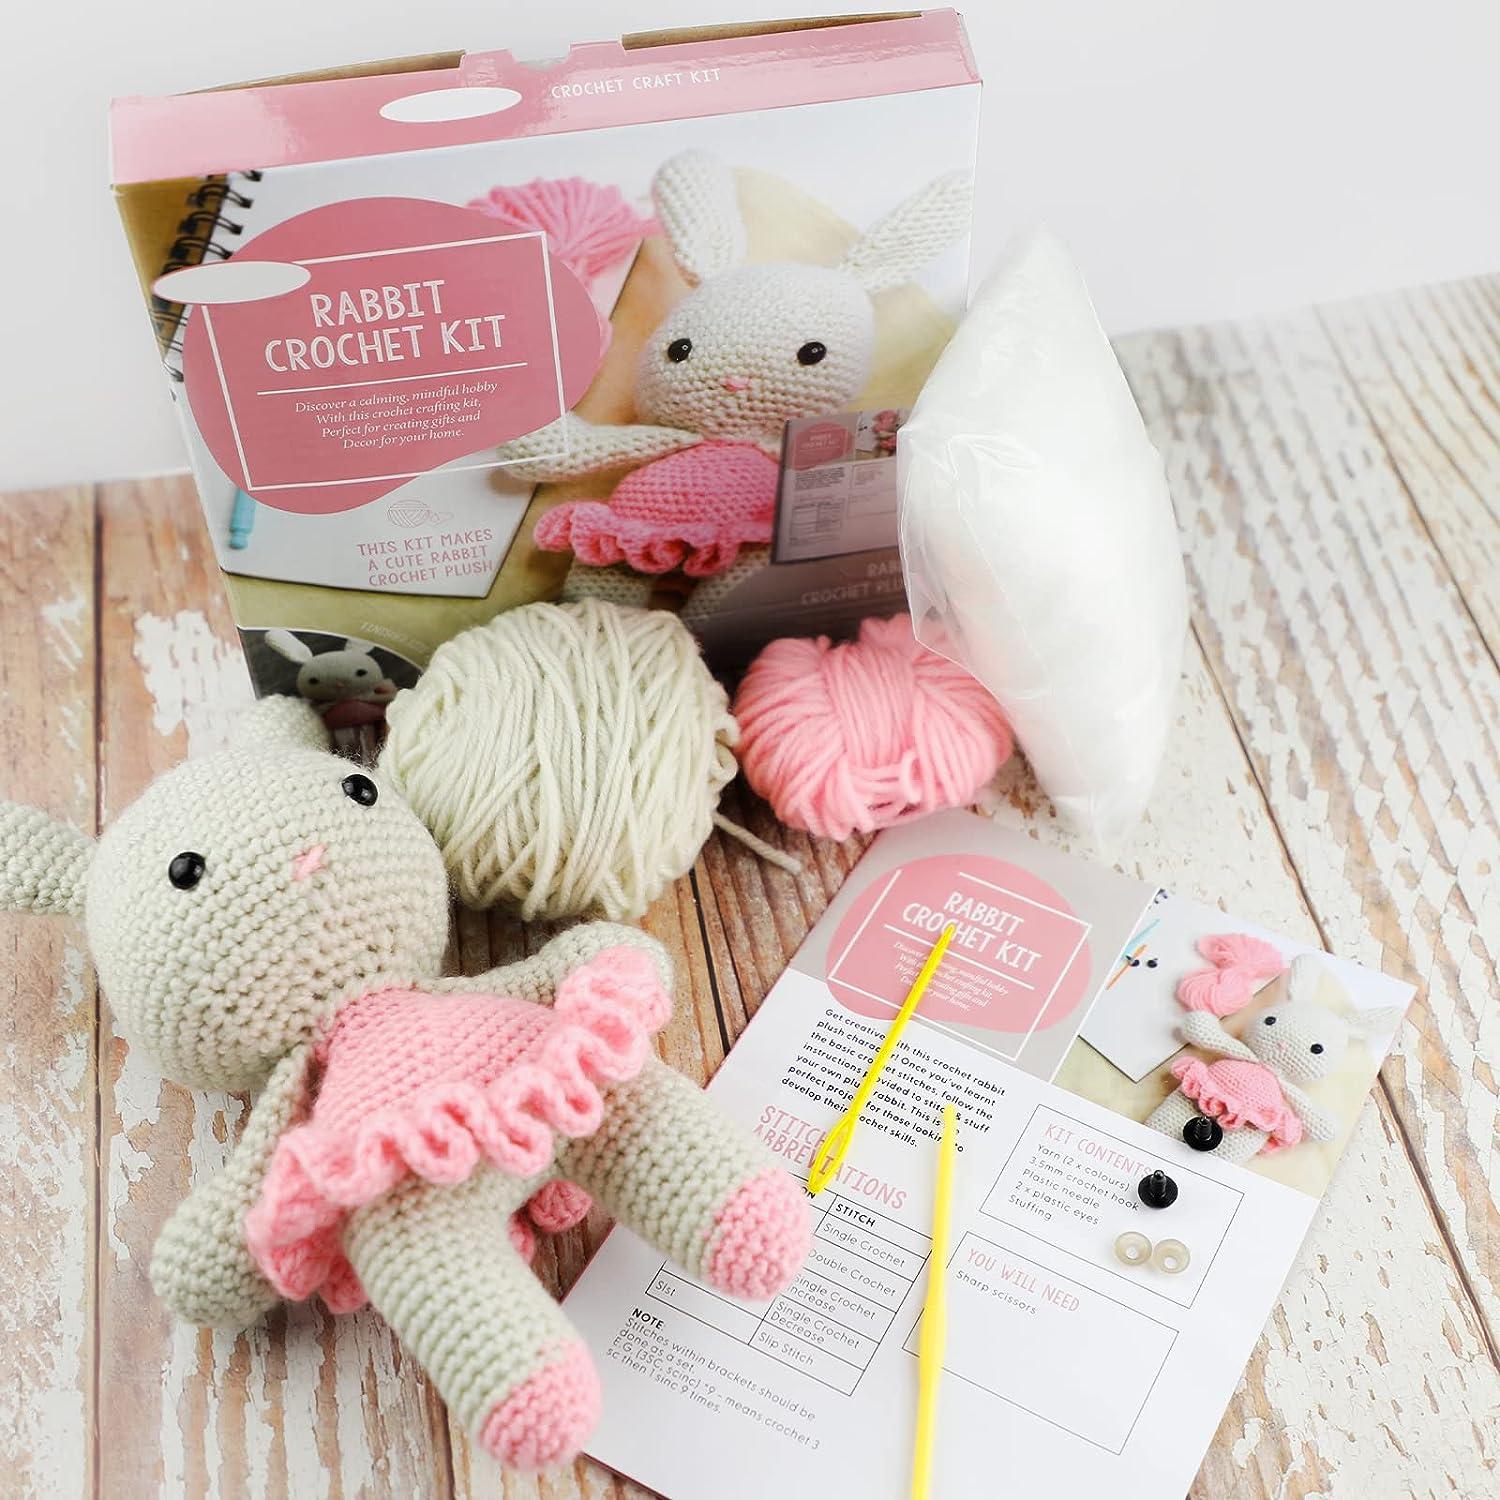 vidabita Beginner Crochet Kit - Rabbit Crochet Kit for Beginners, Amigurumi  Kit for Adults, DIY Knitting Kit Include Crochet Yarn, Hook, Needles and  Stuffing Fibre (10.6 in)